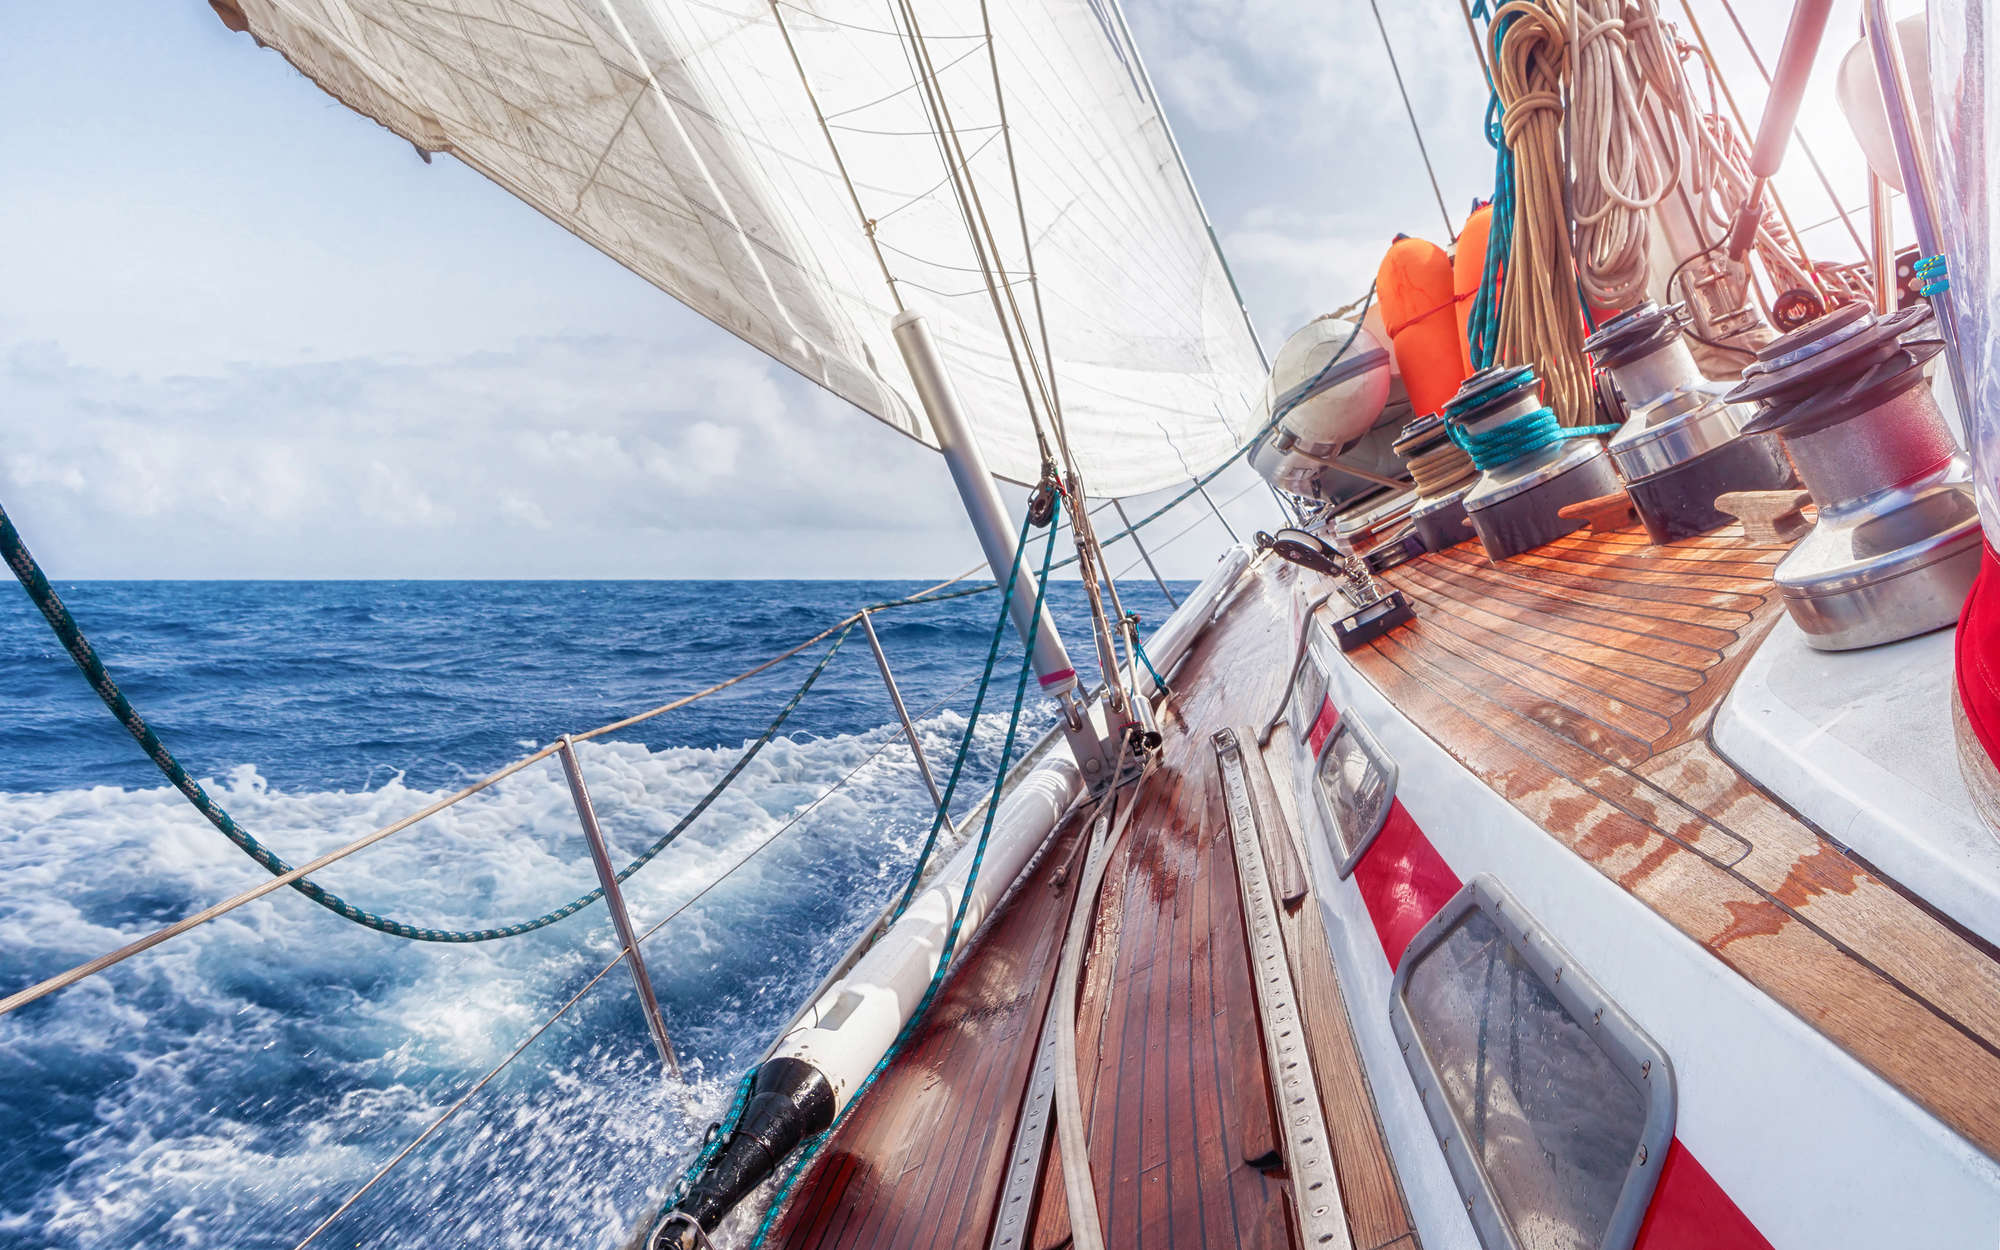             Fototapete Segelboot auf dem Meer – Perlmutt Glattvlies
        